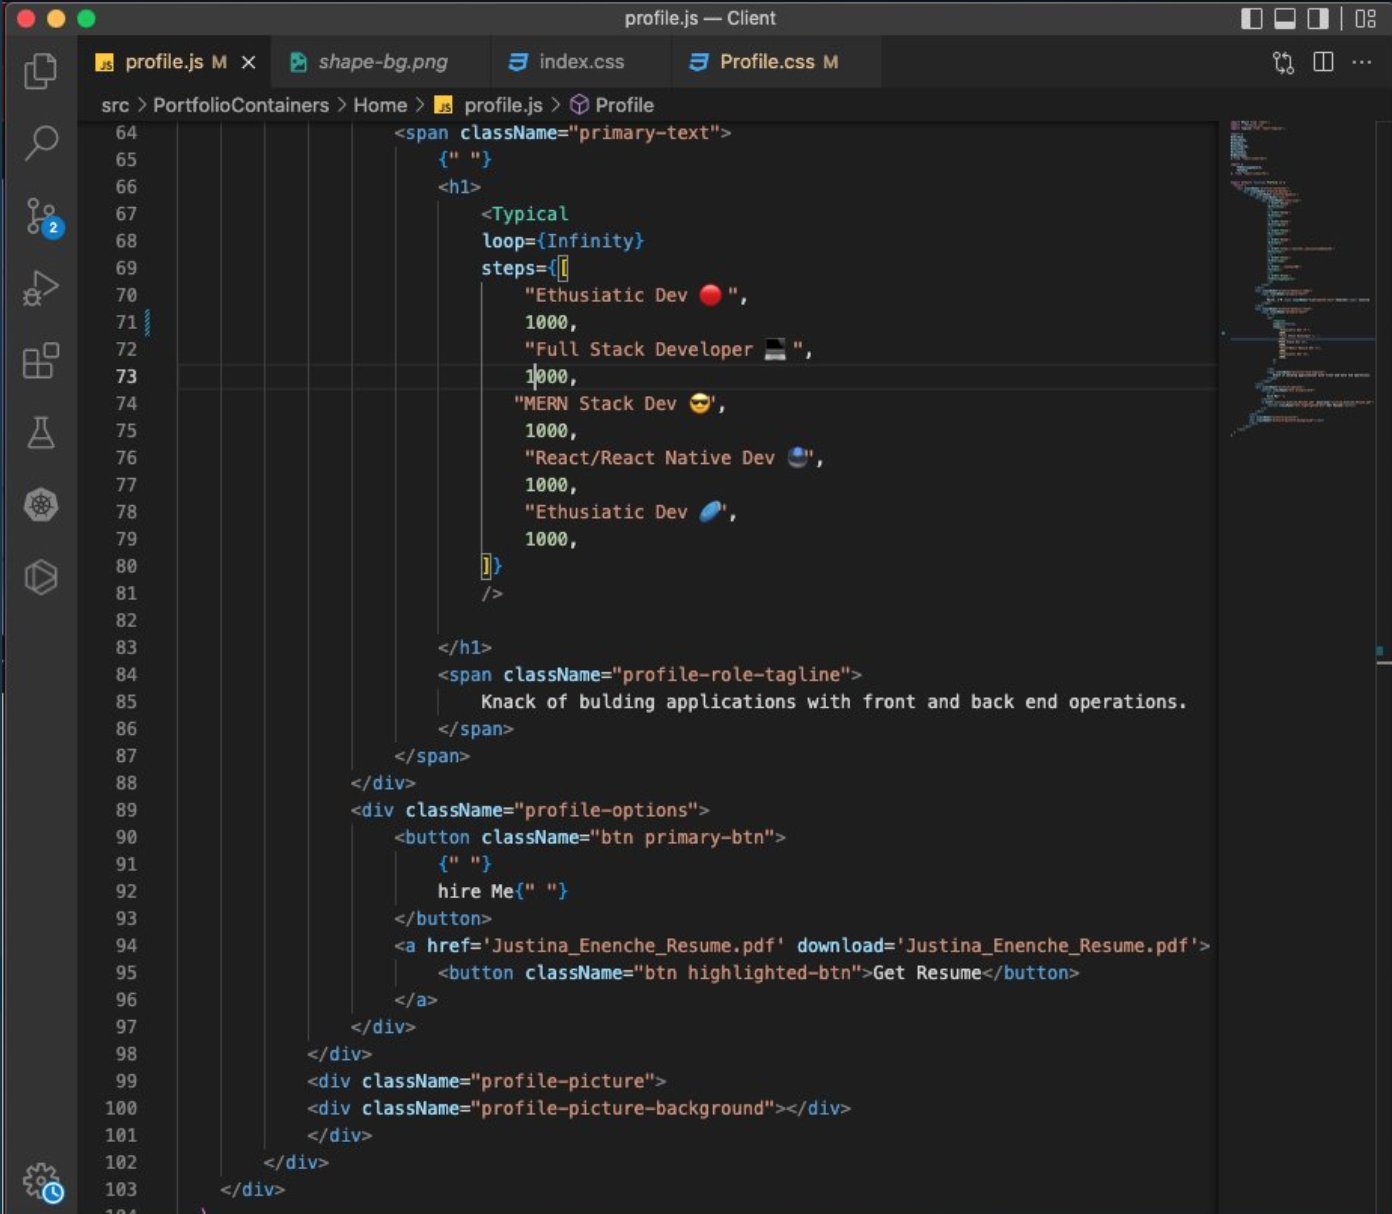 Michael Schildwachter day 15 on #100daysofcode of coding
worked on a portfolio using reactjs.  #100daysofcodingchallenge #reactjs #programmingwithmosh #deved #webdevelopement #webdesign #programming #coding #Python #Java #javascript #code #coder 